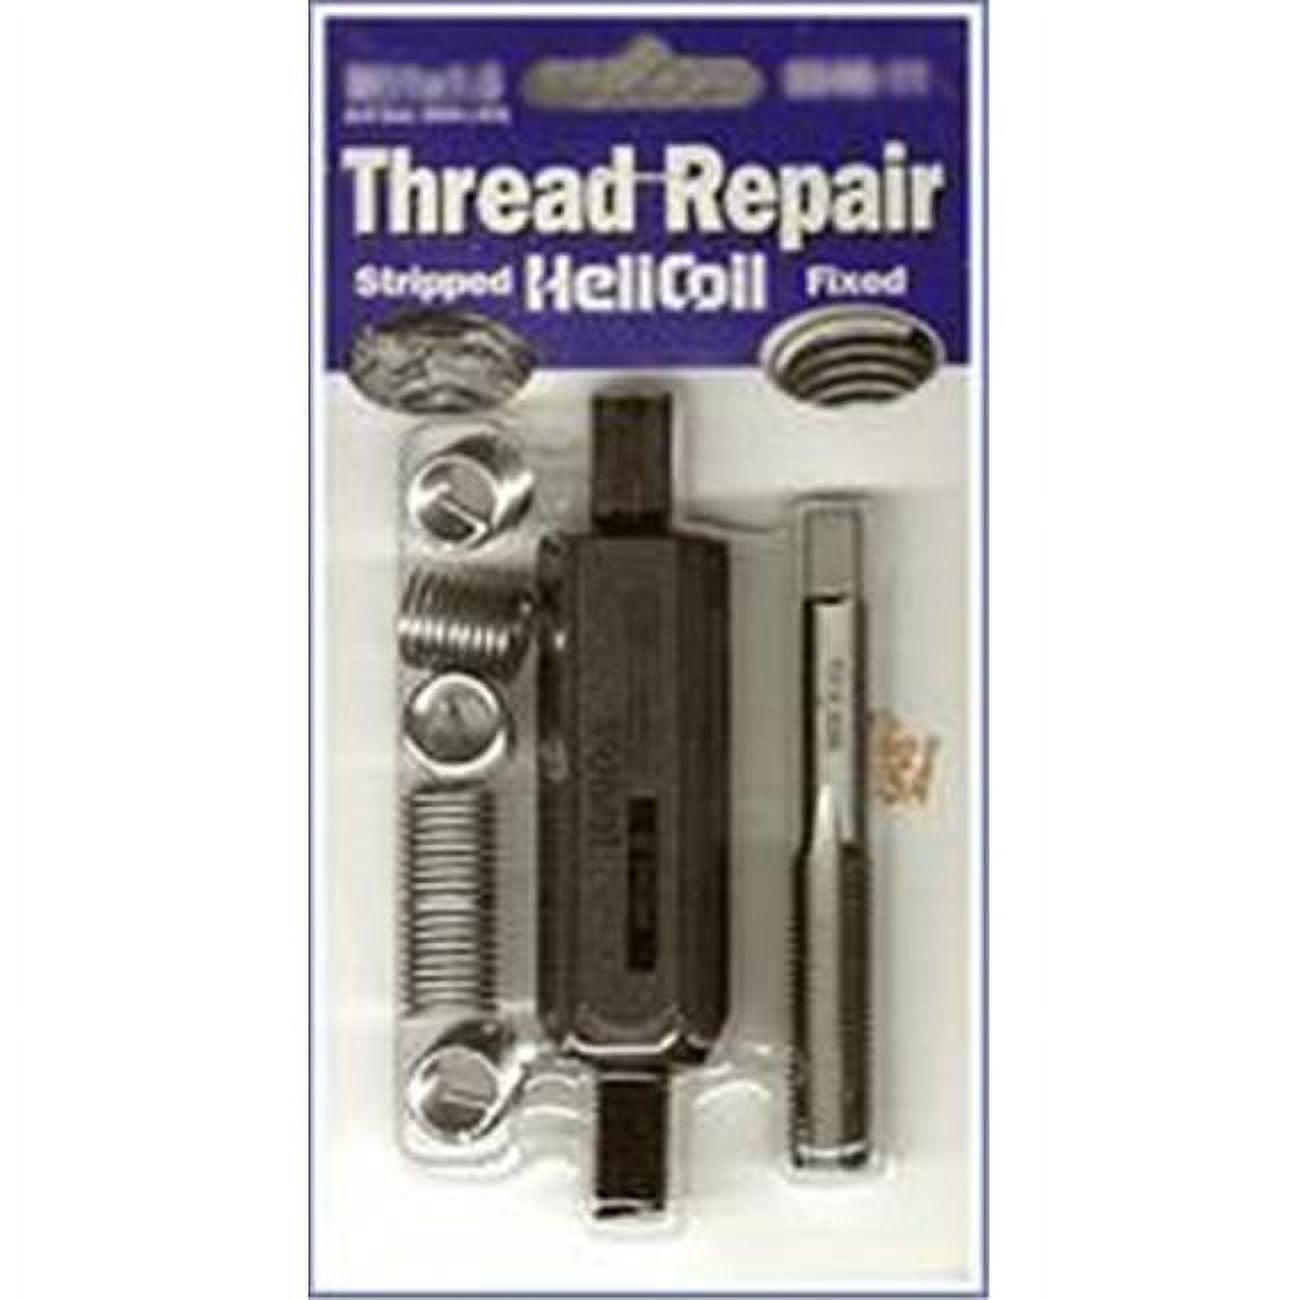 Helicoil 5546 8 M8 X 1.25 Metric Coarse Thread Repair Kit 